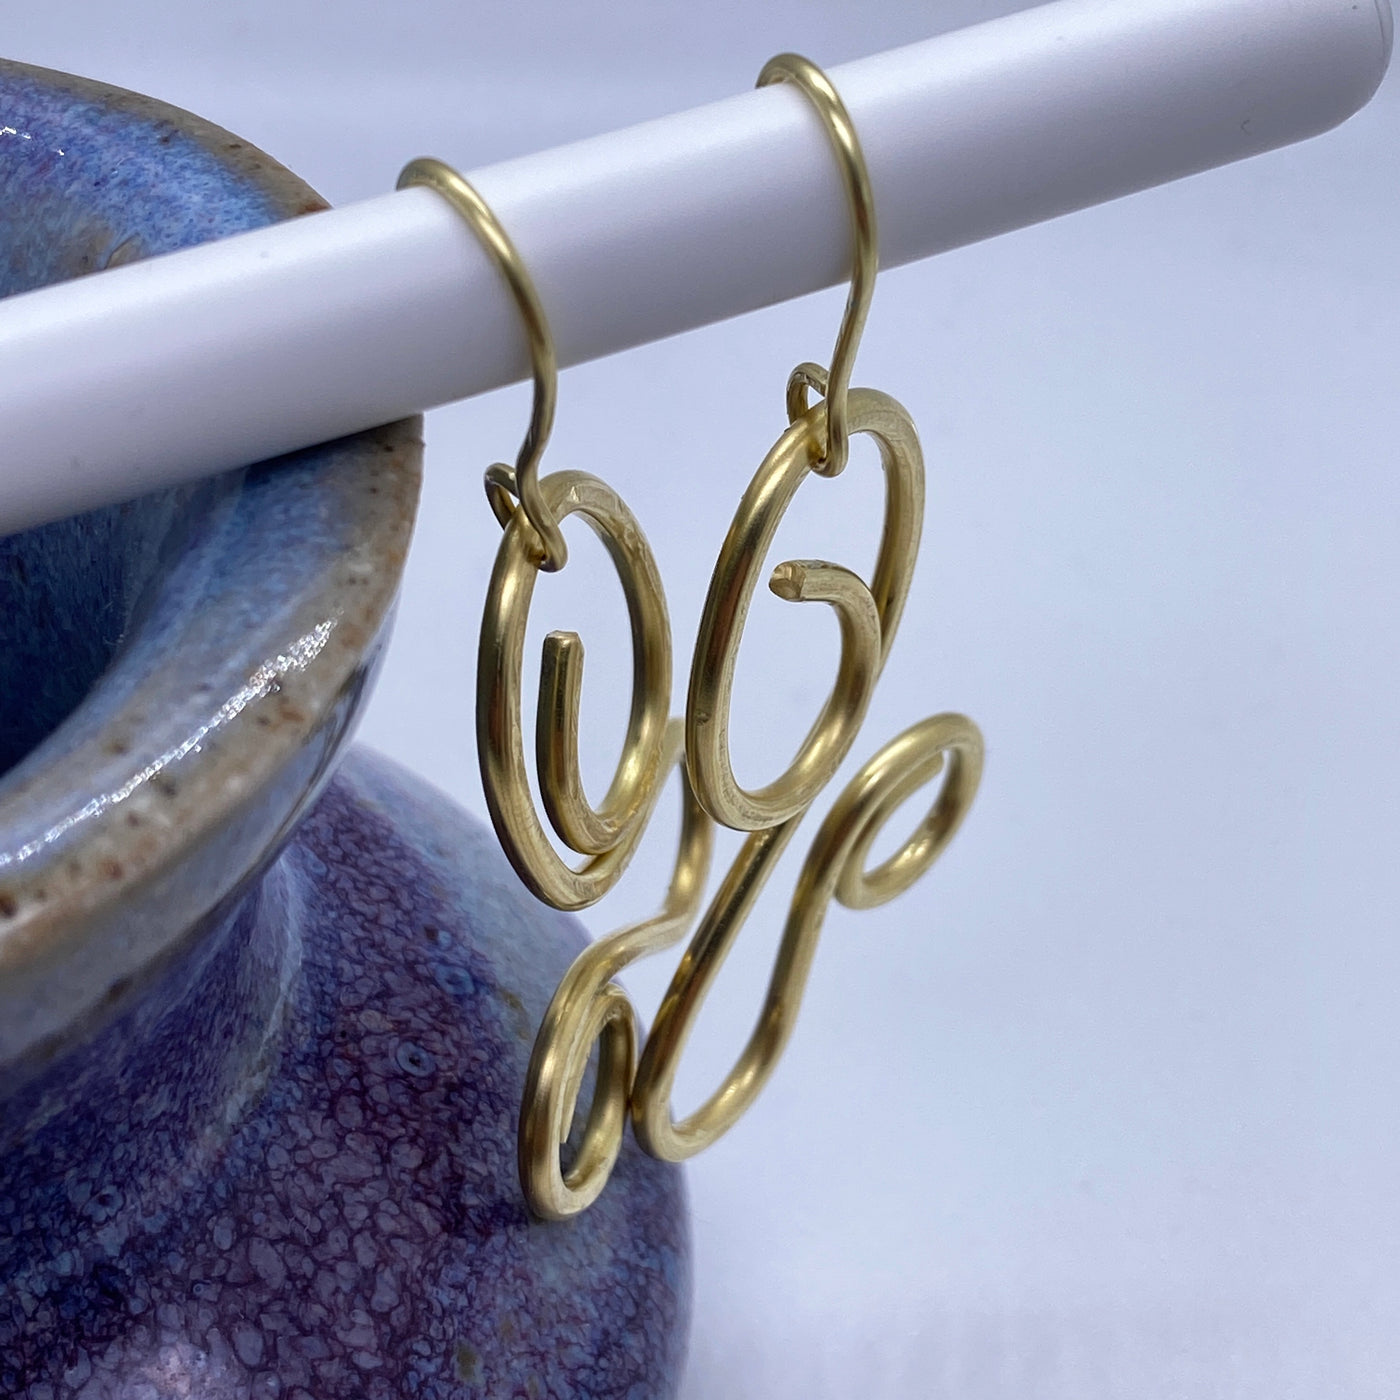 Brass abstract earrings medium